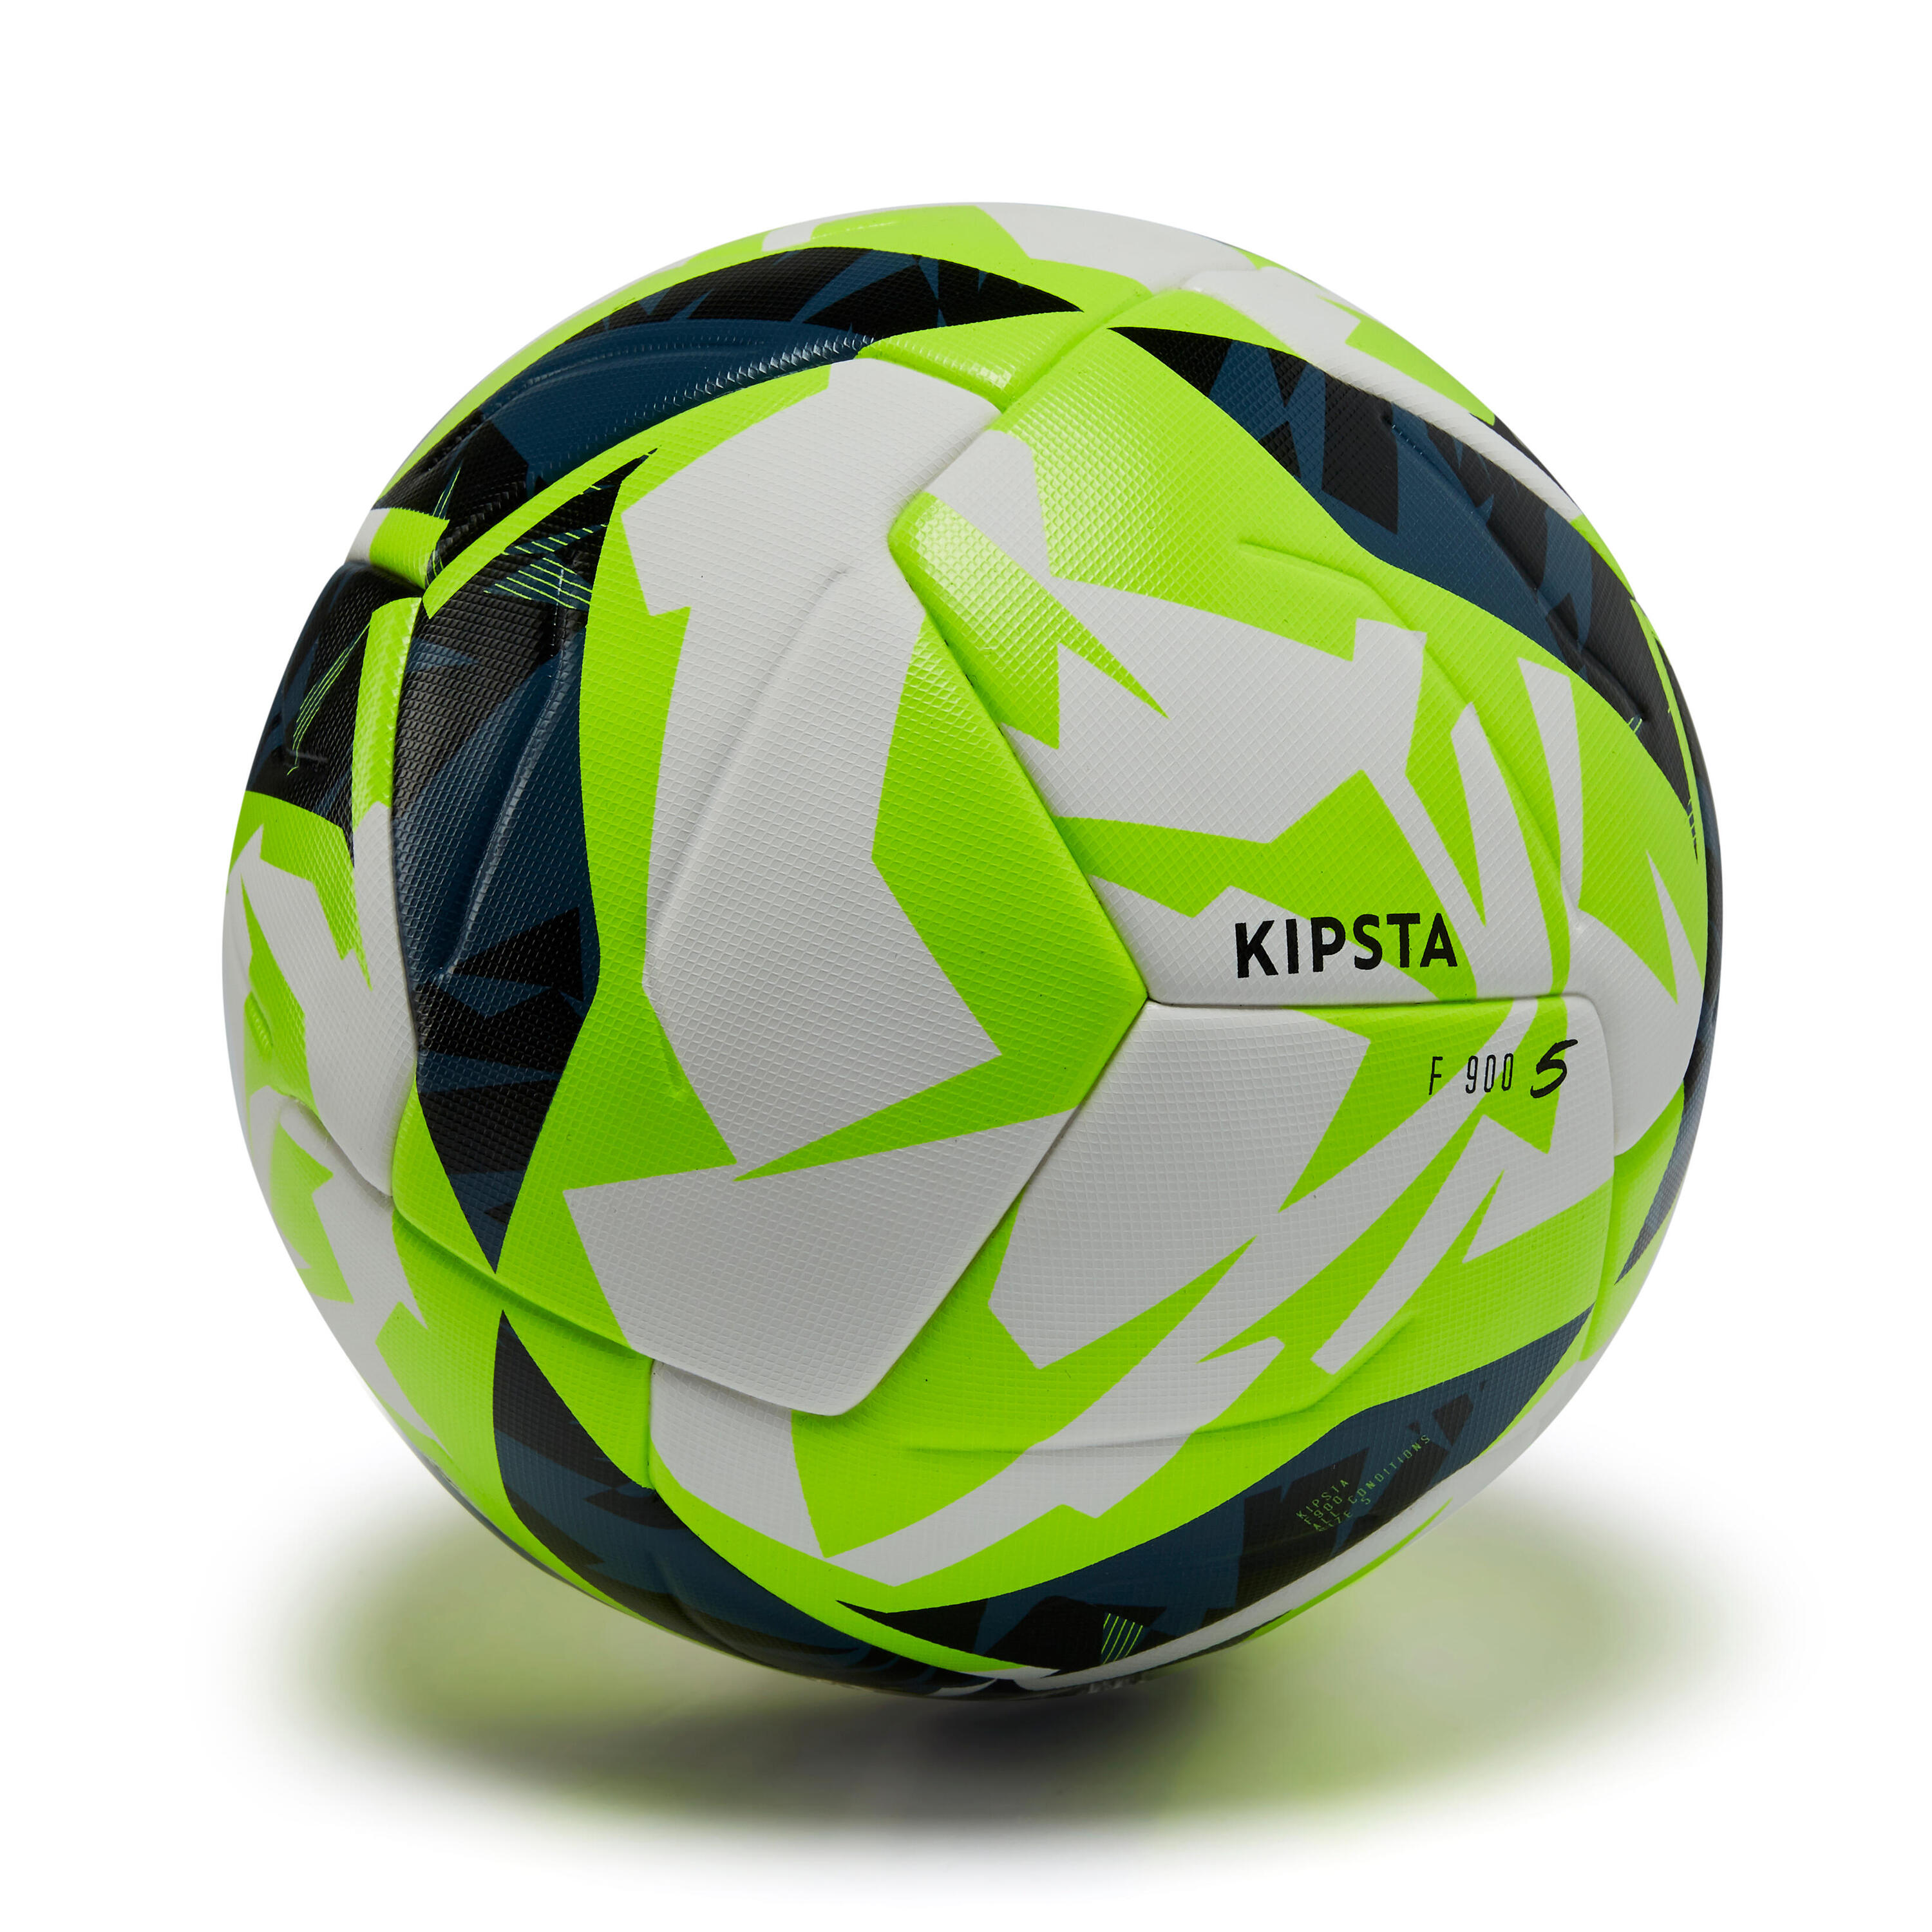 Football F900 FIFA Quality Pro термоклееный размер 5 белый/желтый KIPSTA, белый футбольный мяч челси